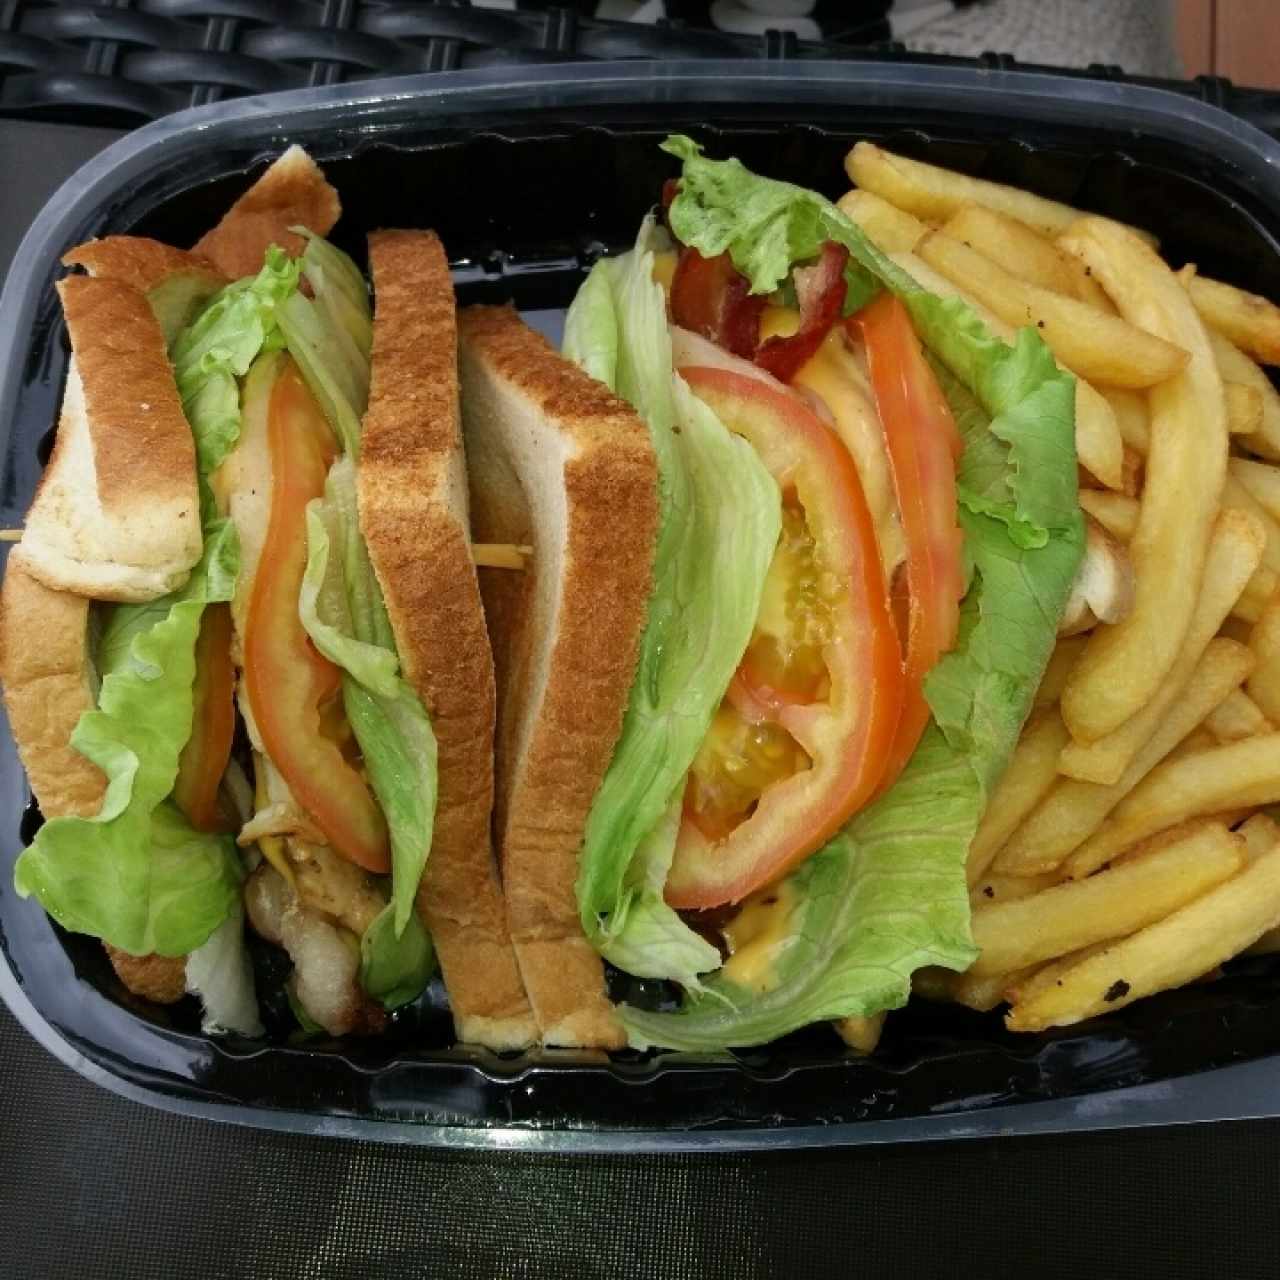 Club sandwich con papas fritas